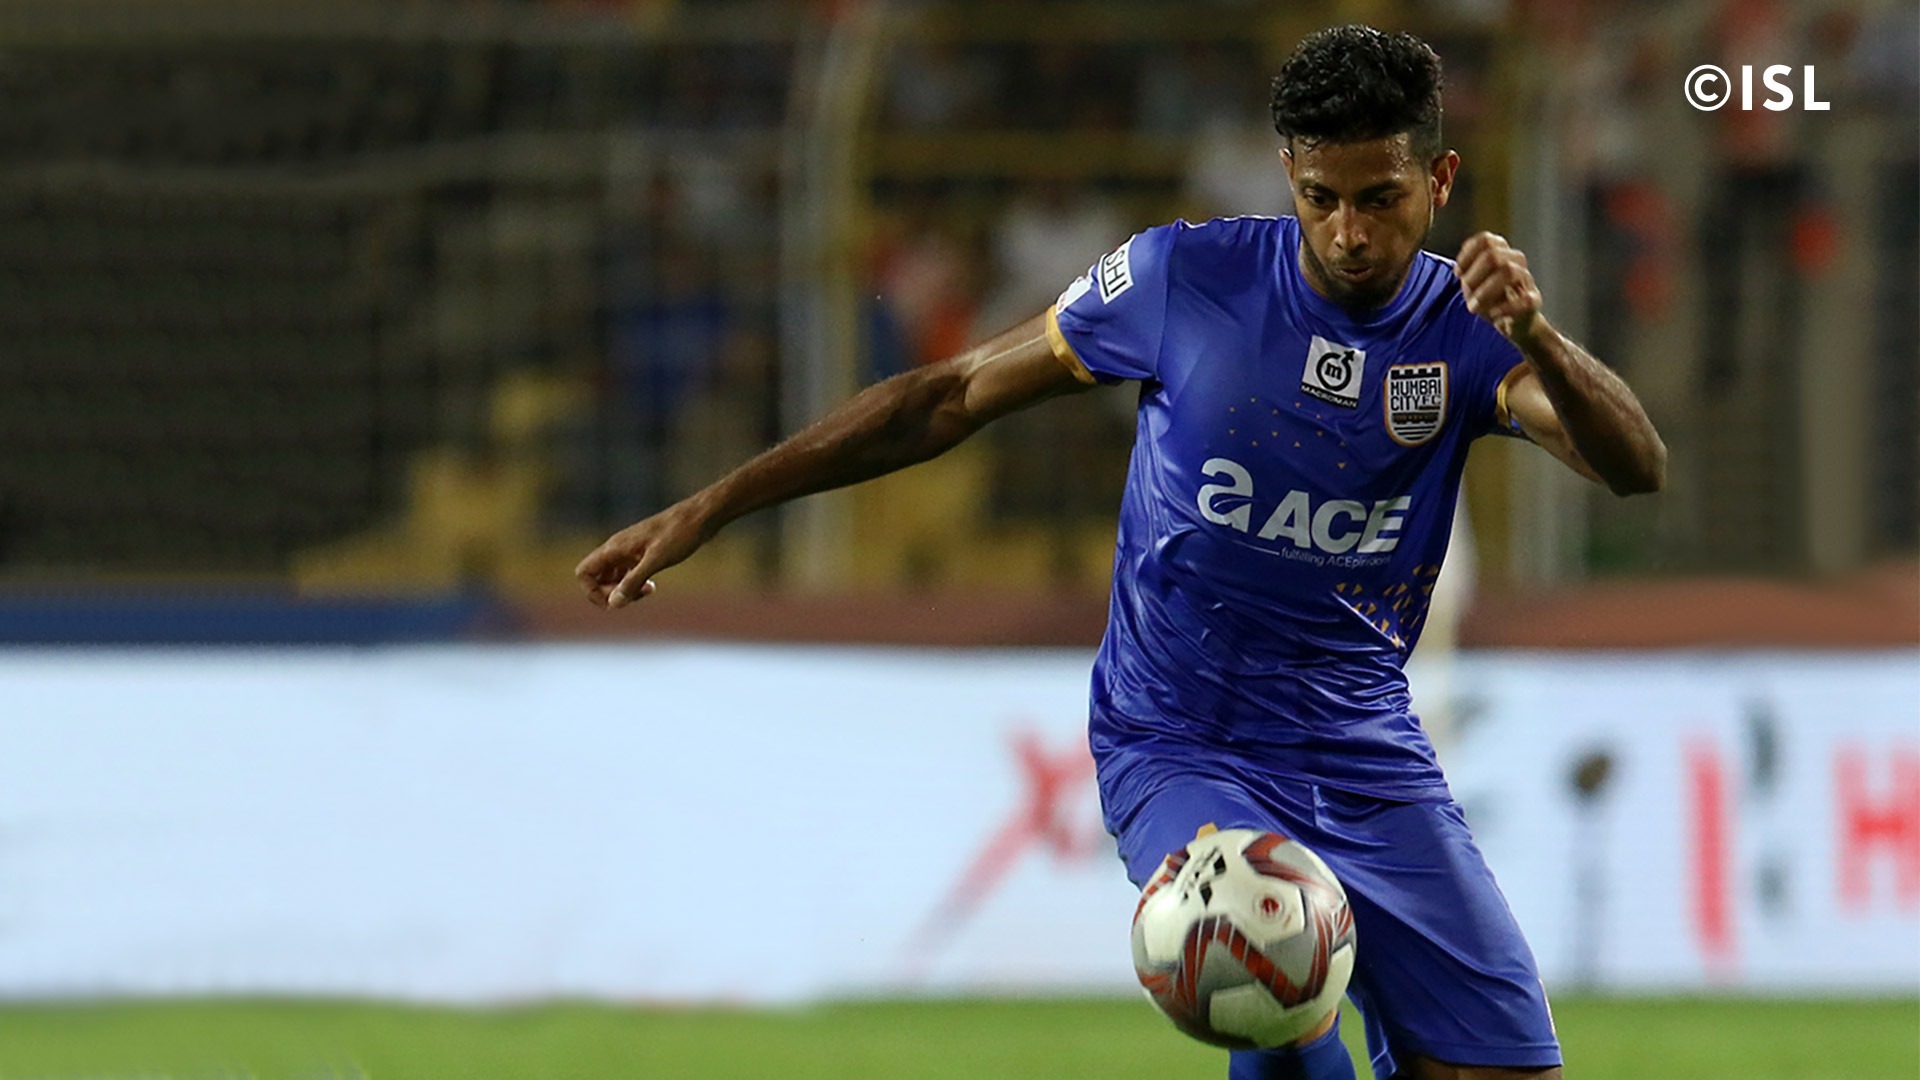 ISL | Joyner Lourenco to play for Jamshedpur FC in 2019-20 season